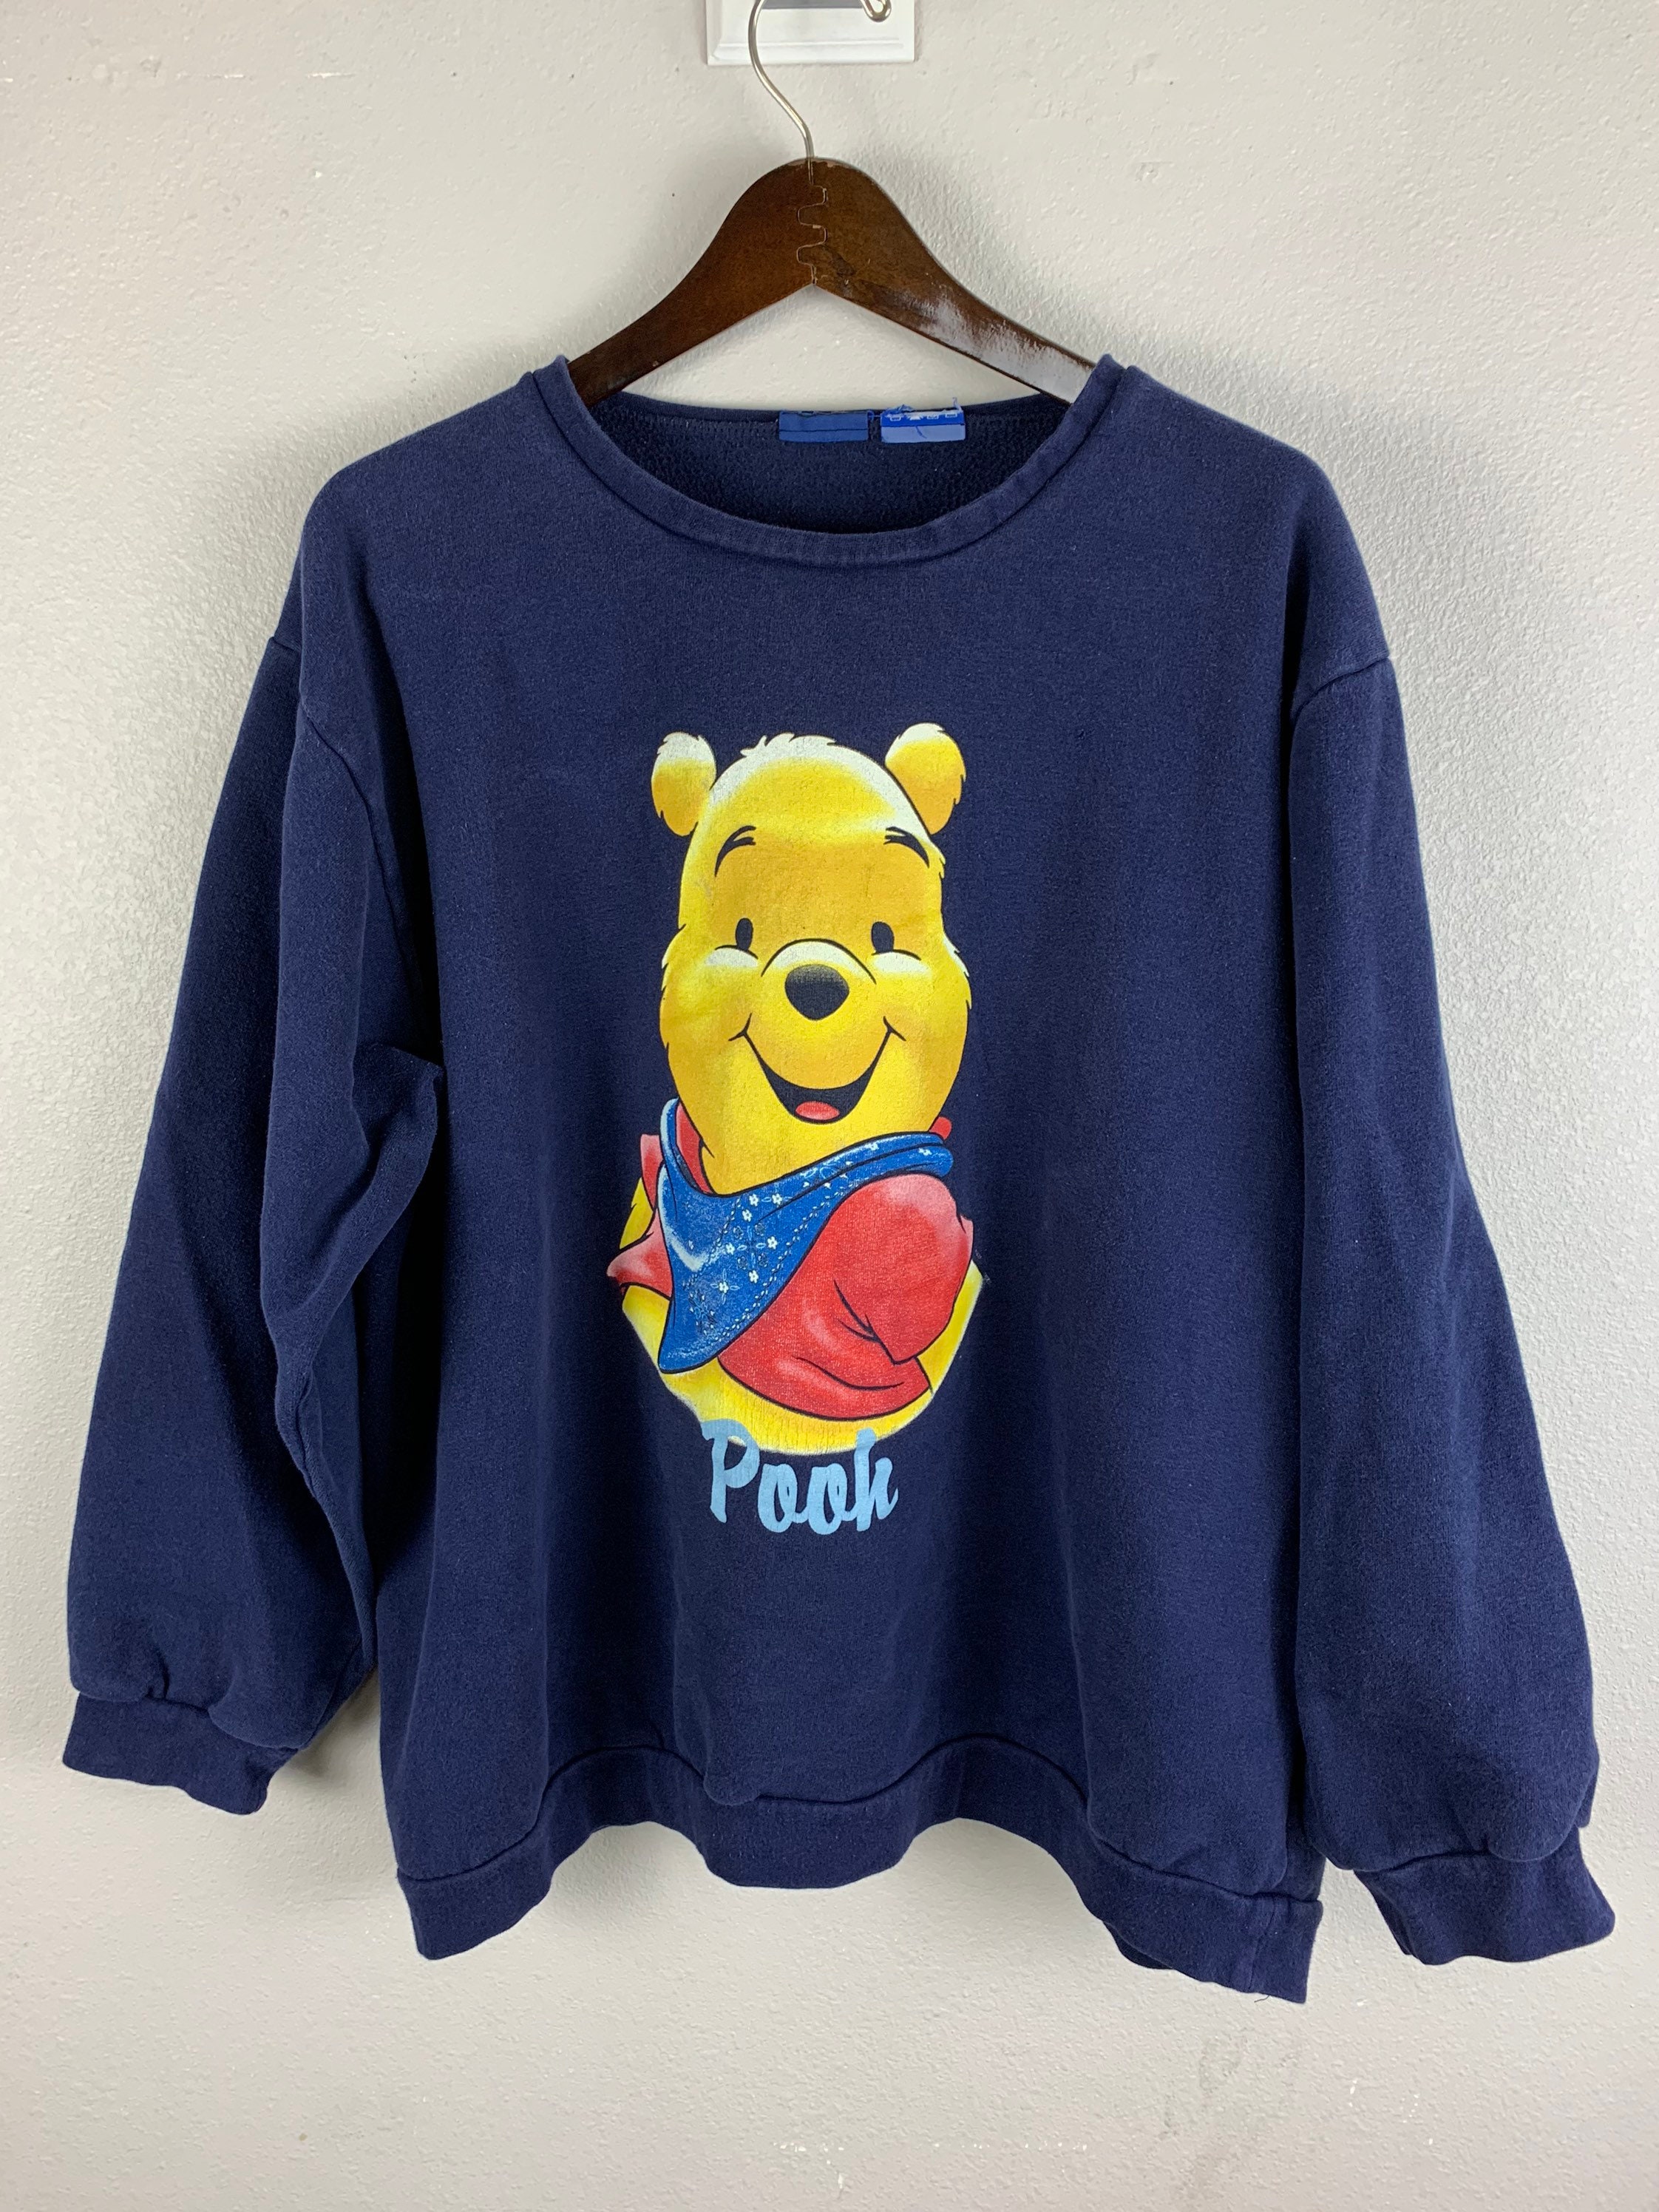 Winnie the Pooh sweatshirt size XXL | Etsy